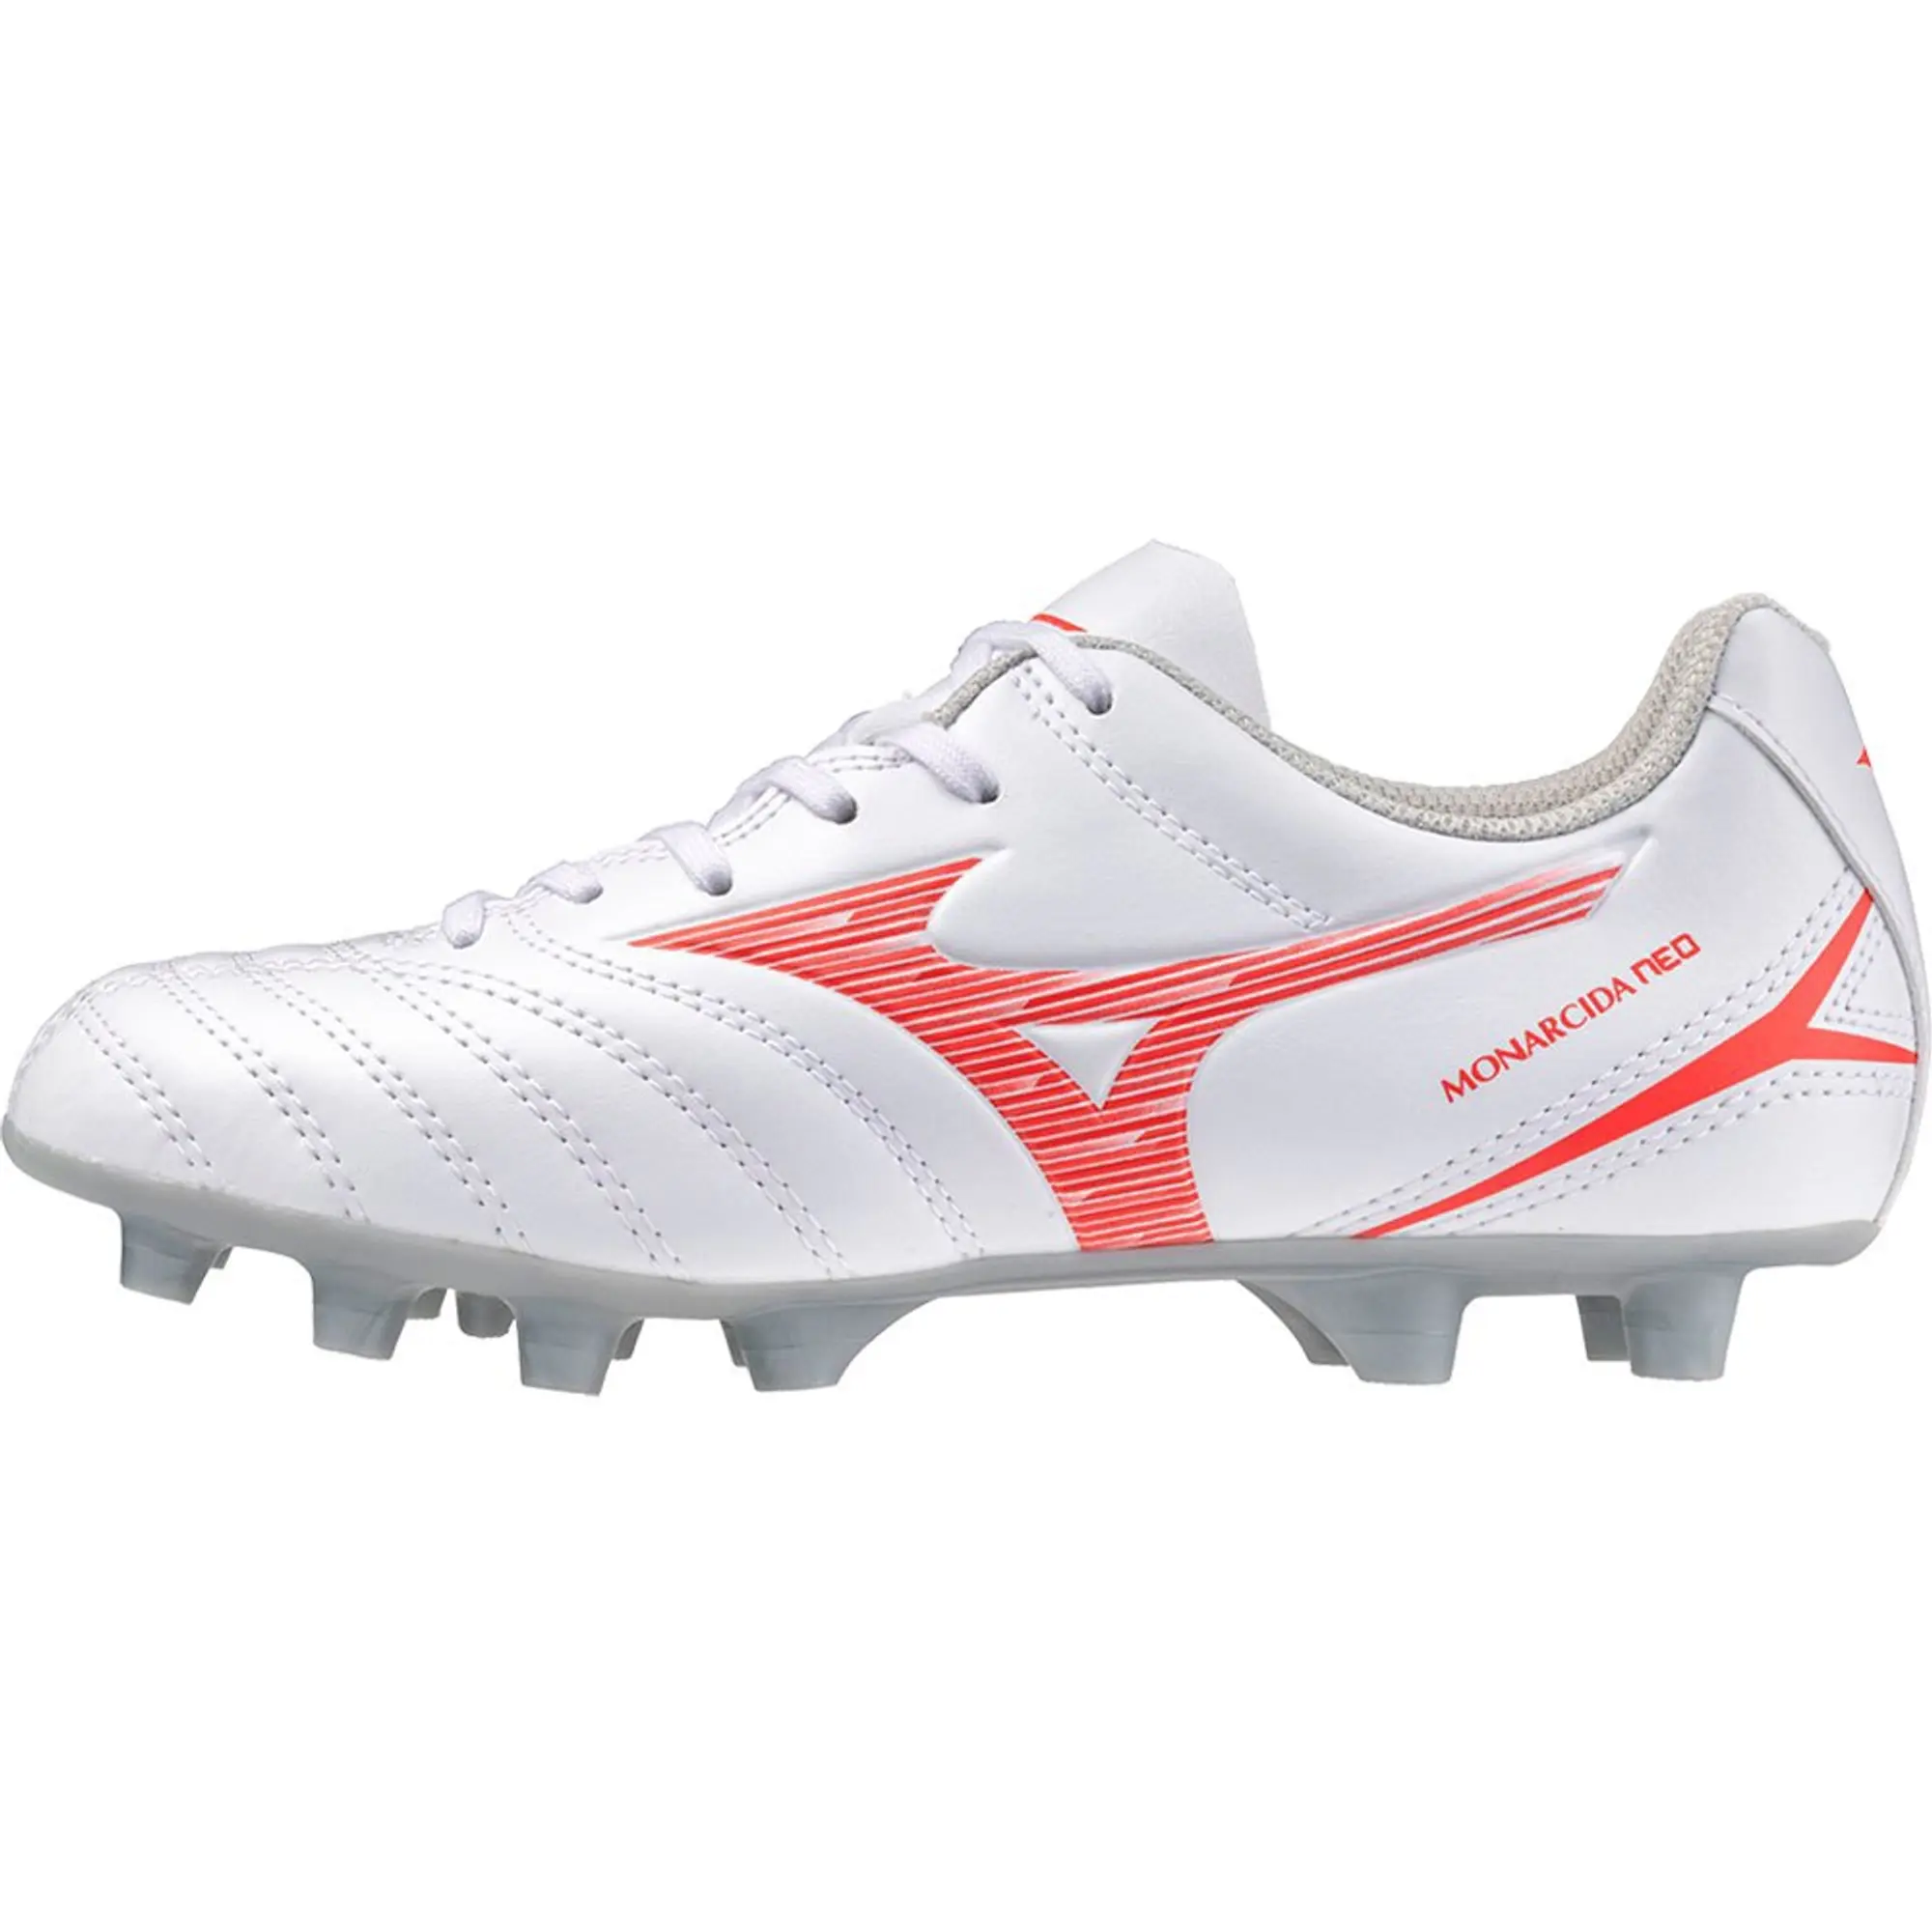 Mizuno Monarcida Neo Iii Select Md Football Boots  - White